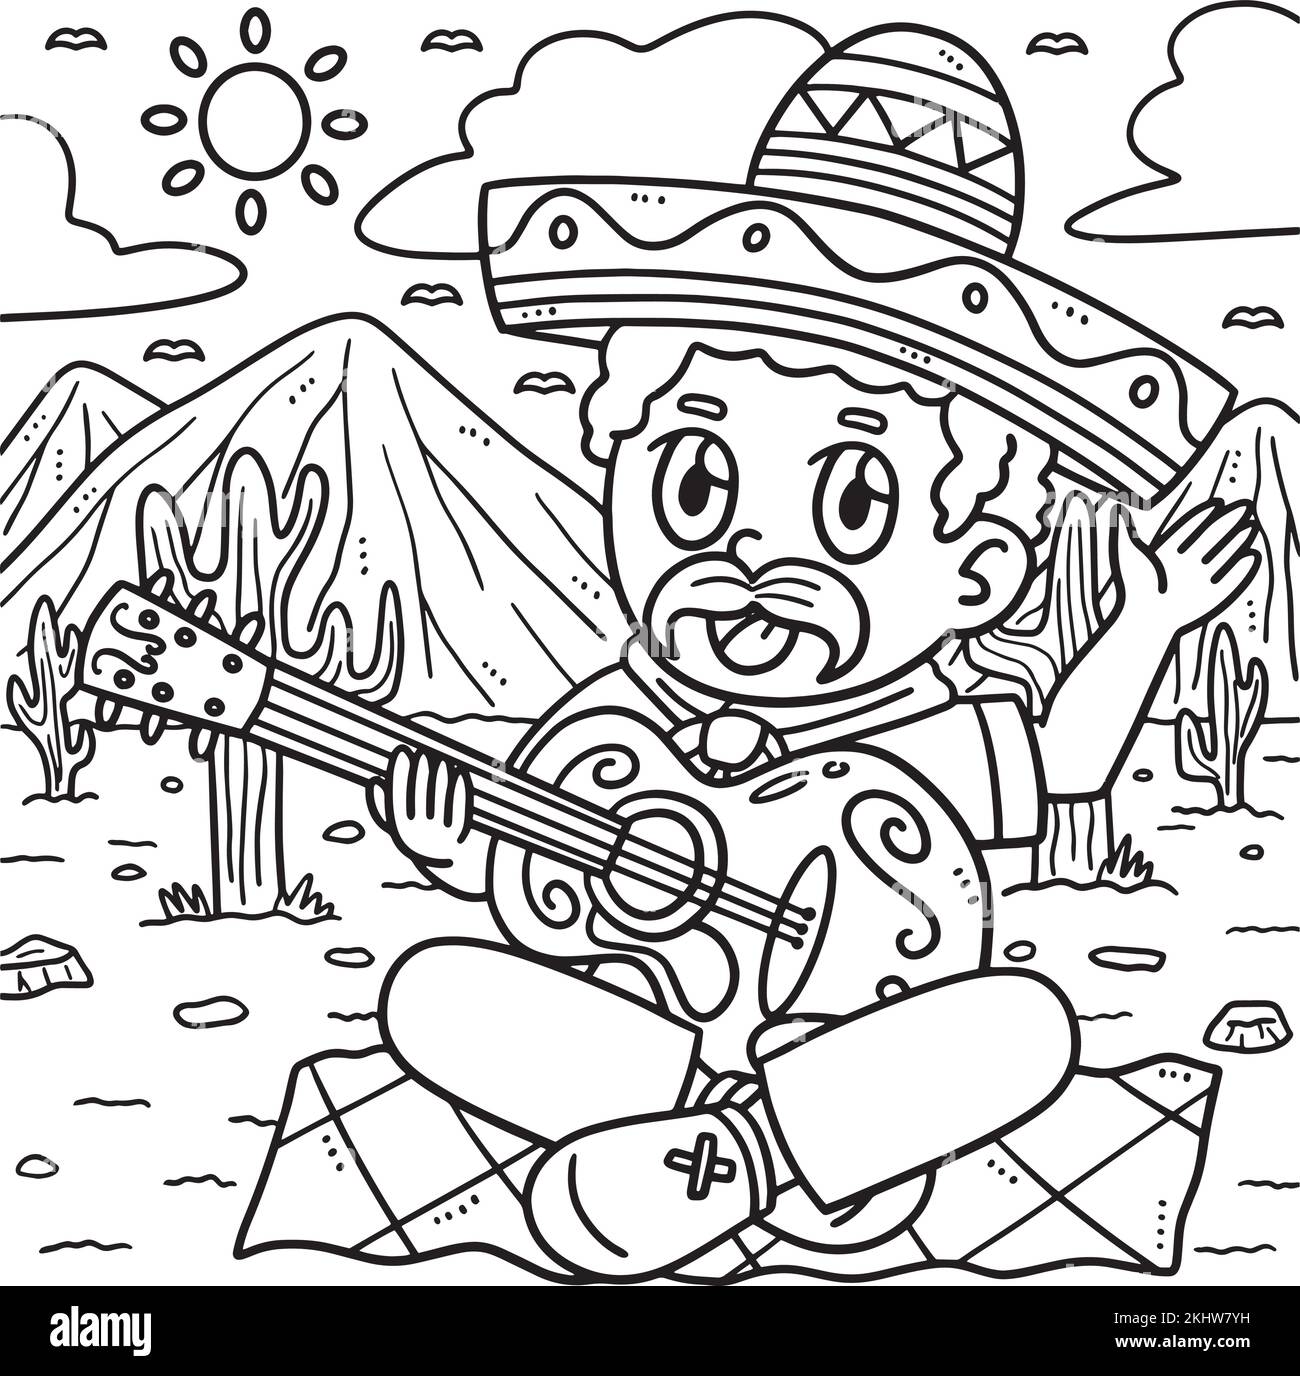 Cinco de Mayo Man Playing Guitar Coloring Page Illustrazione Vettoriale